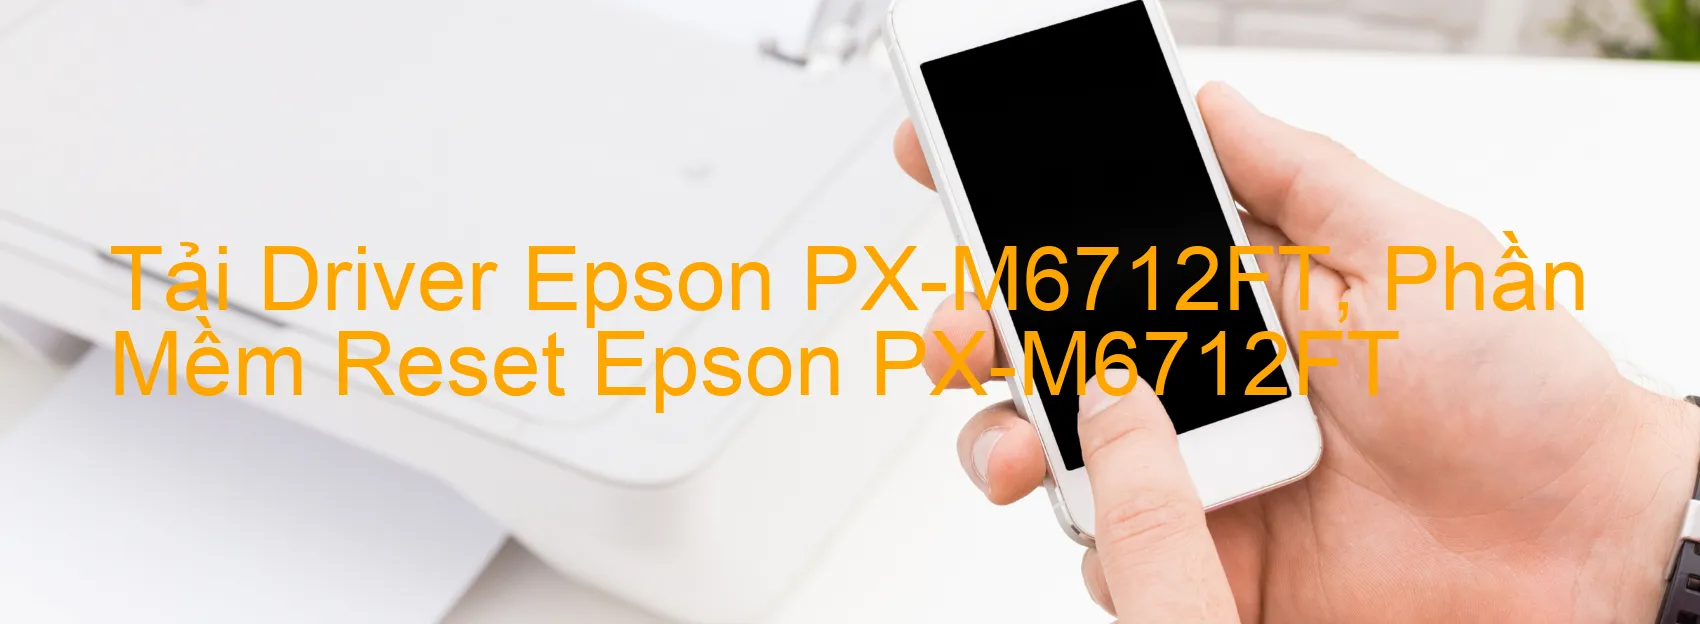 Driver Epson PX-M6712FT, Phần Mềm Reset Epson PX-M6712FT